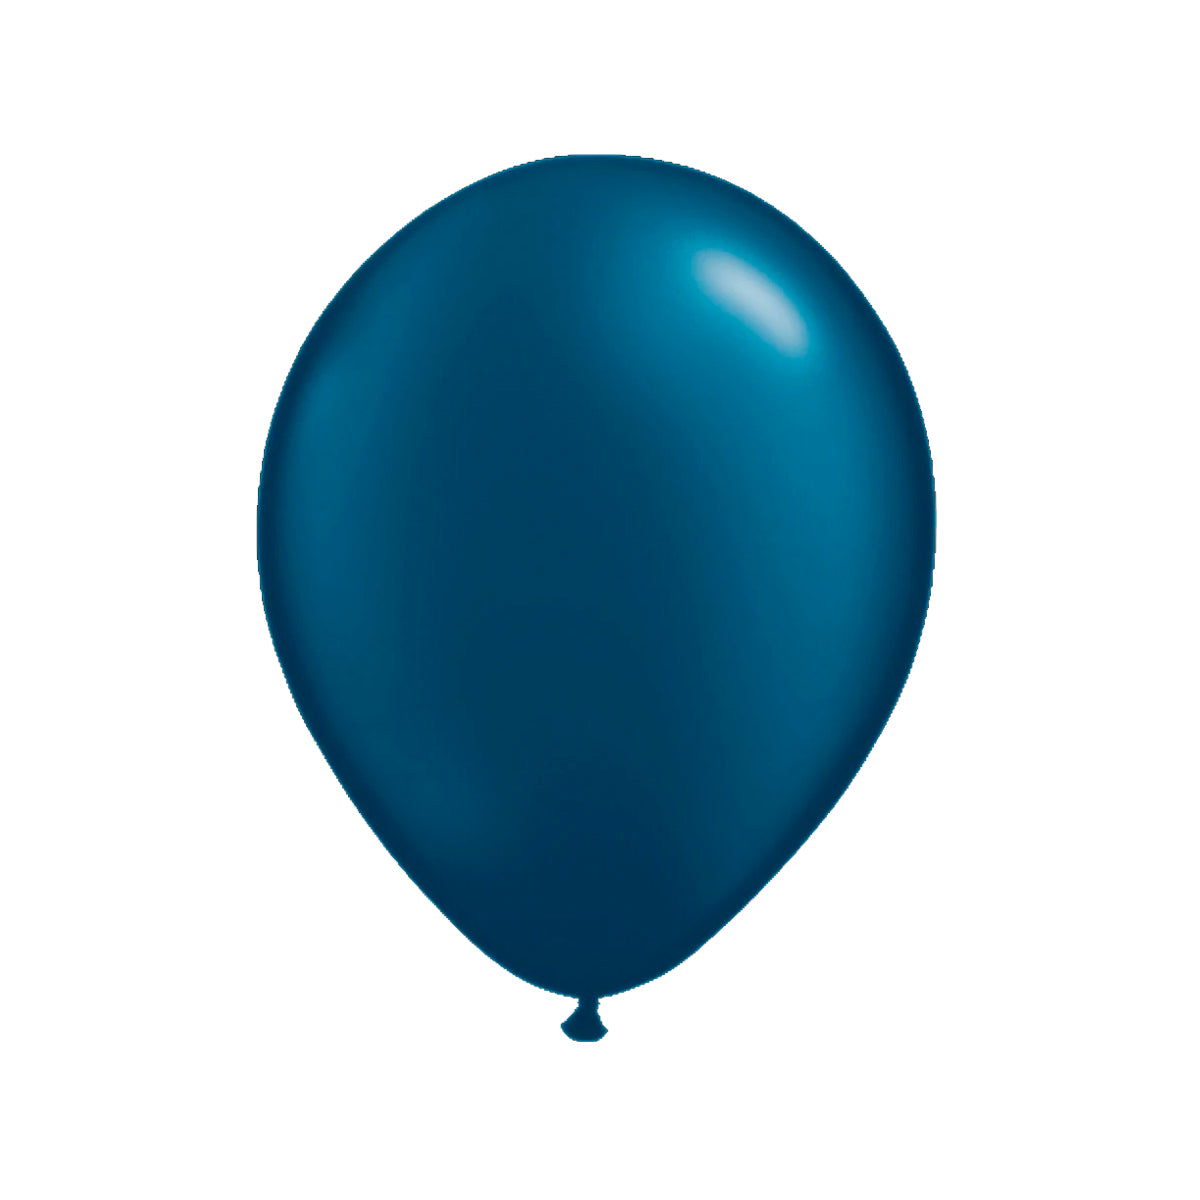 Globo azul, globo azul s, azul marino, esfera png